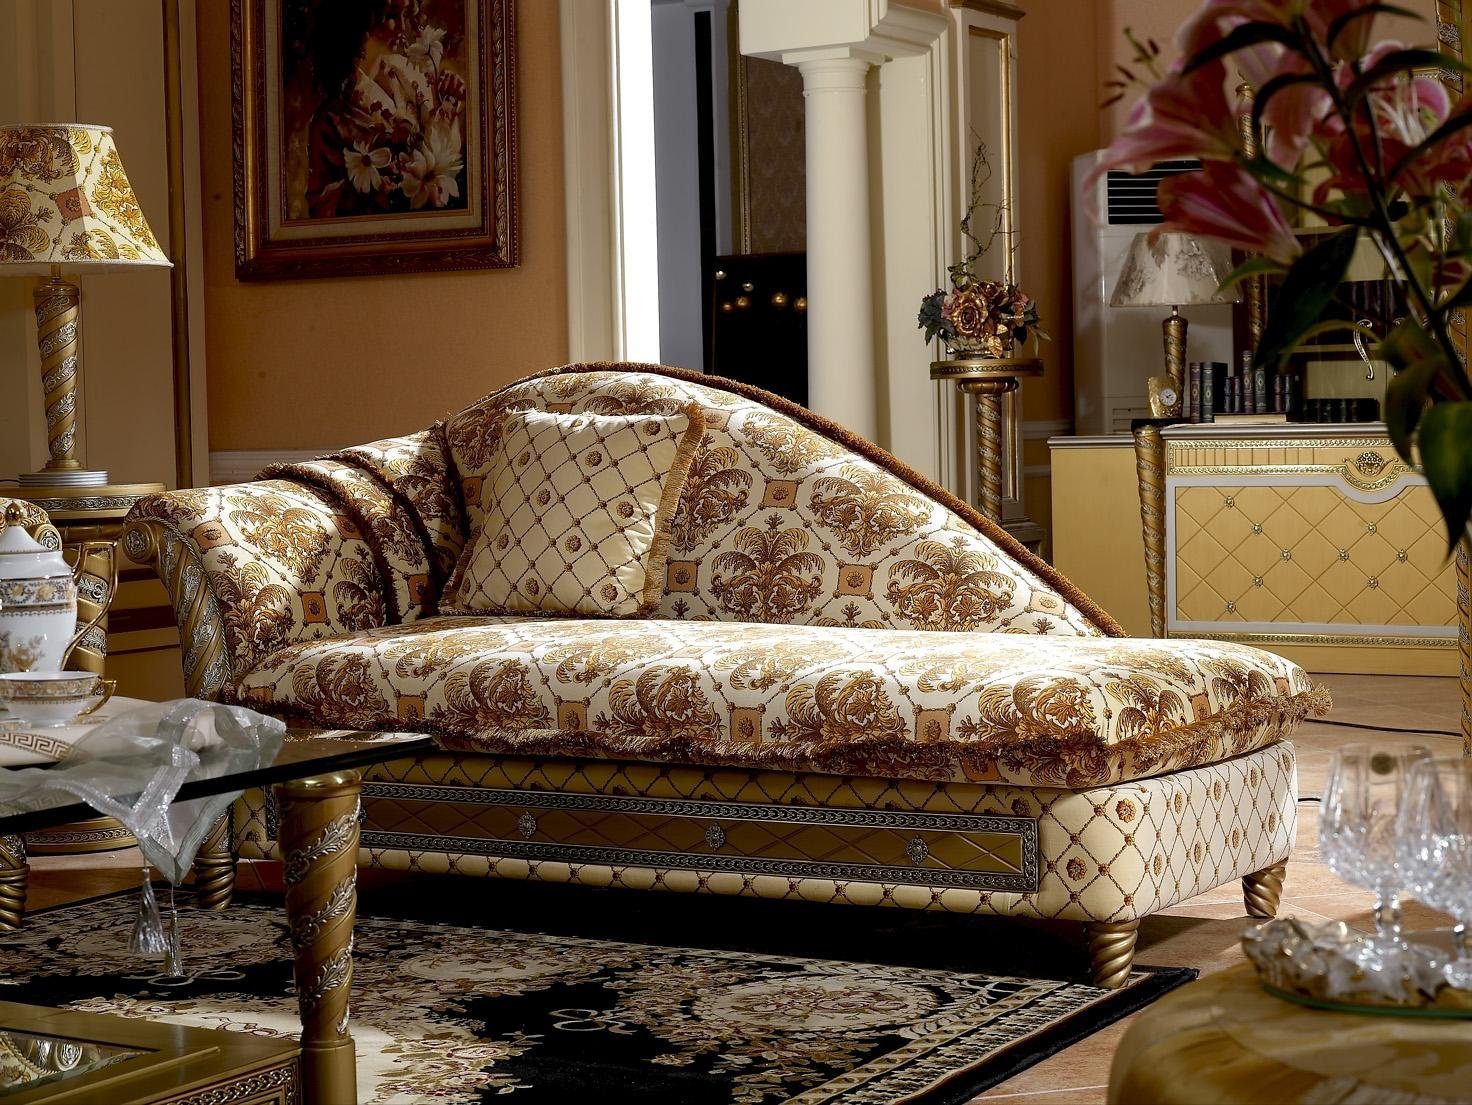 Couch JVmoebel in Liegen Textil, Stil Chaise Chaiselounge Liege Chaiselongue Made Sofa Antik Europe